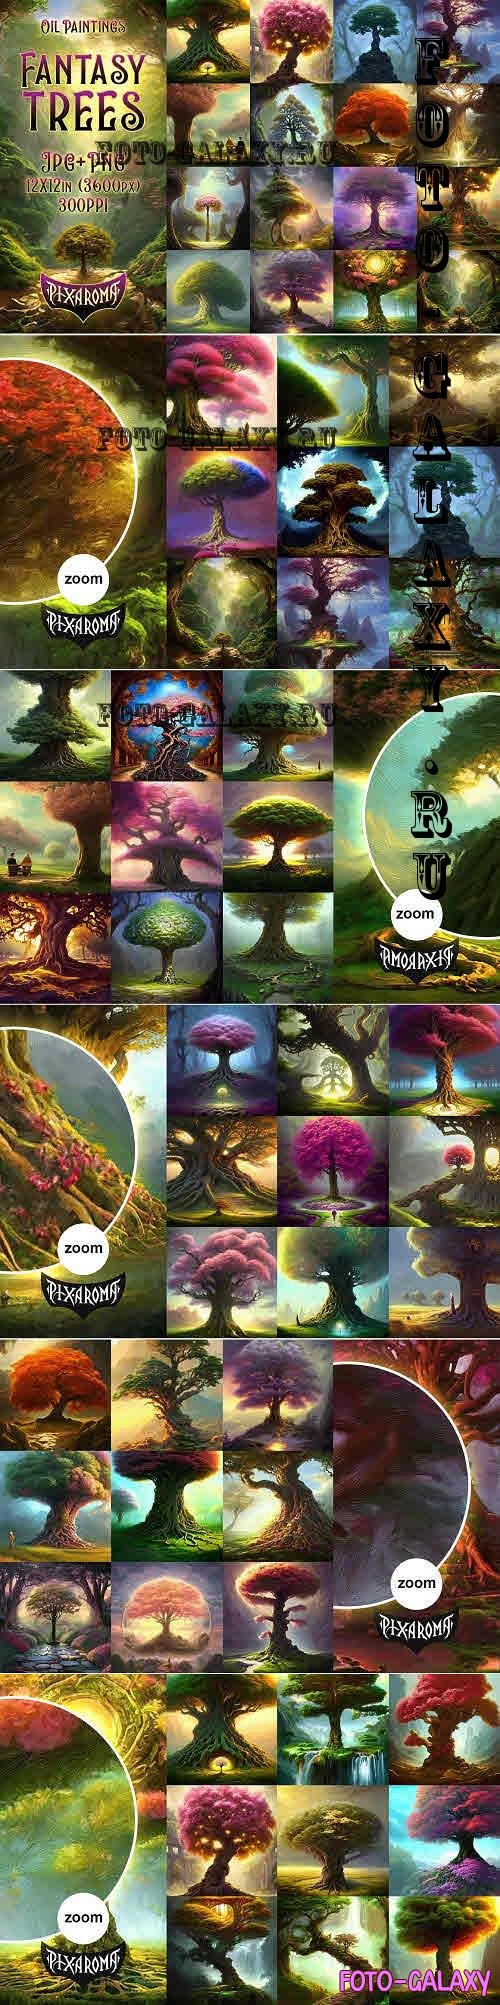 100 Fantasy Trees - Oil Painting Art - 7556701